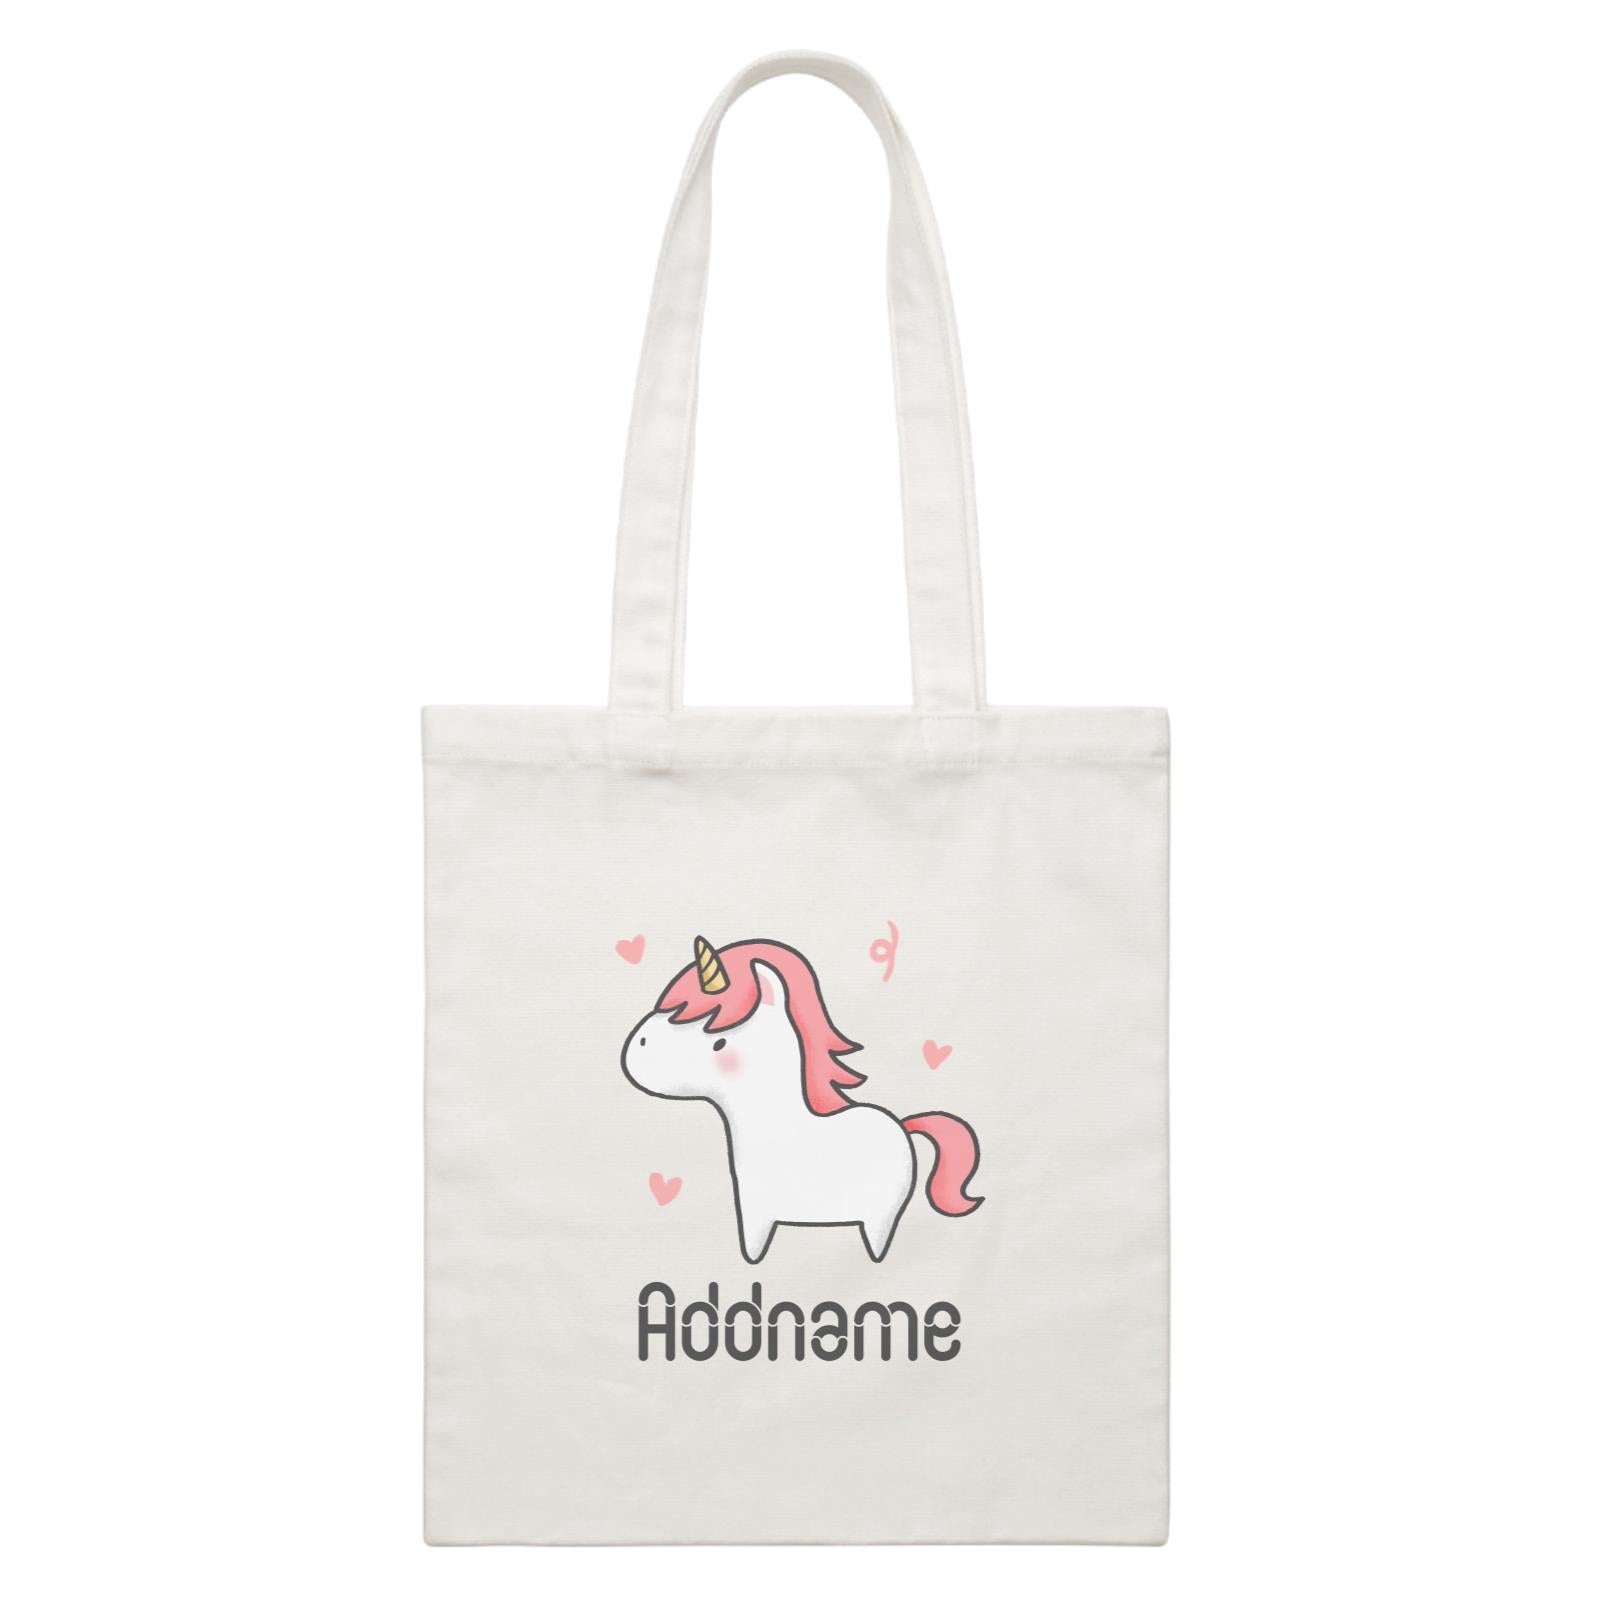 Cute Hand Drawn Style Unicorn Addname White Canvas Bag